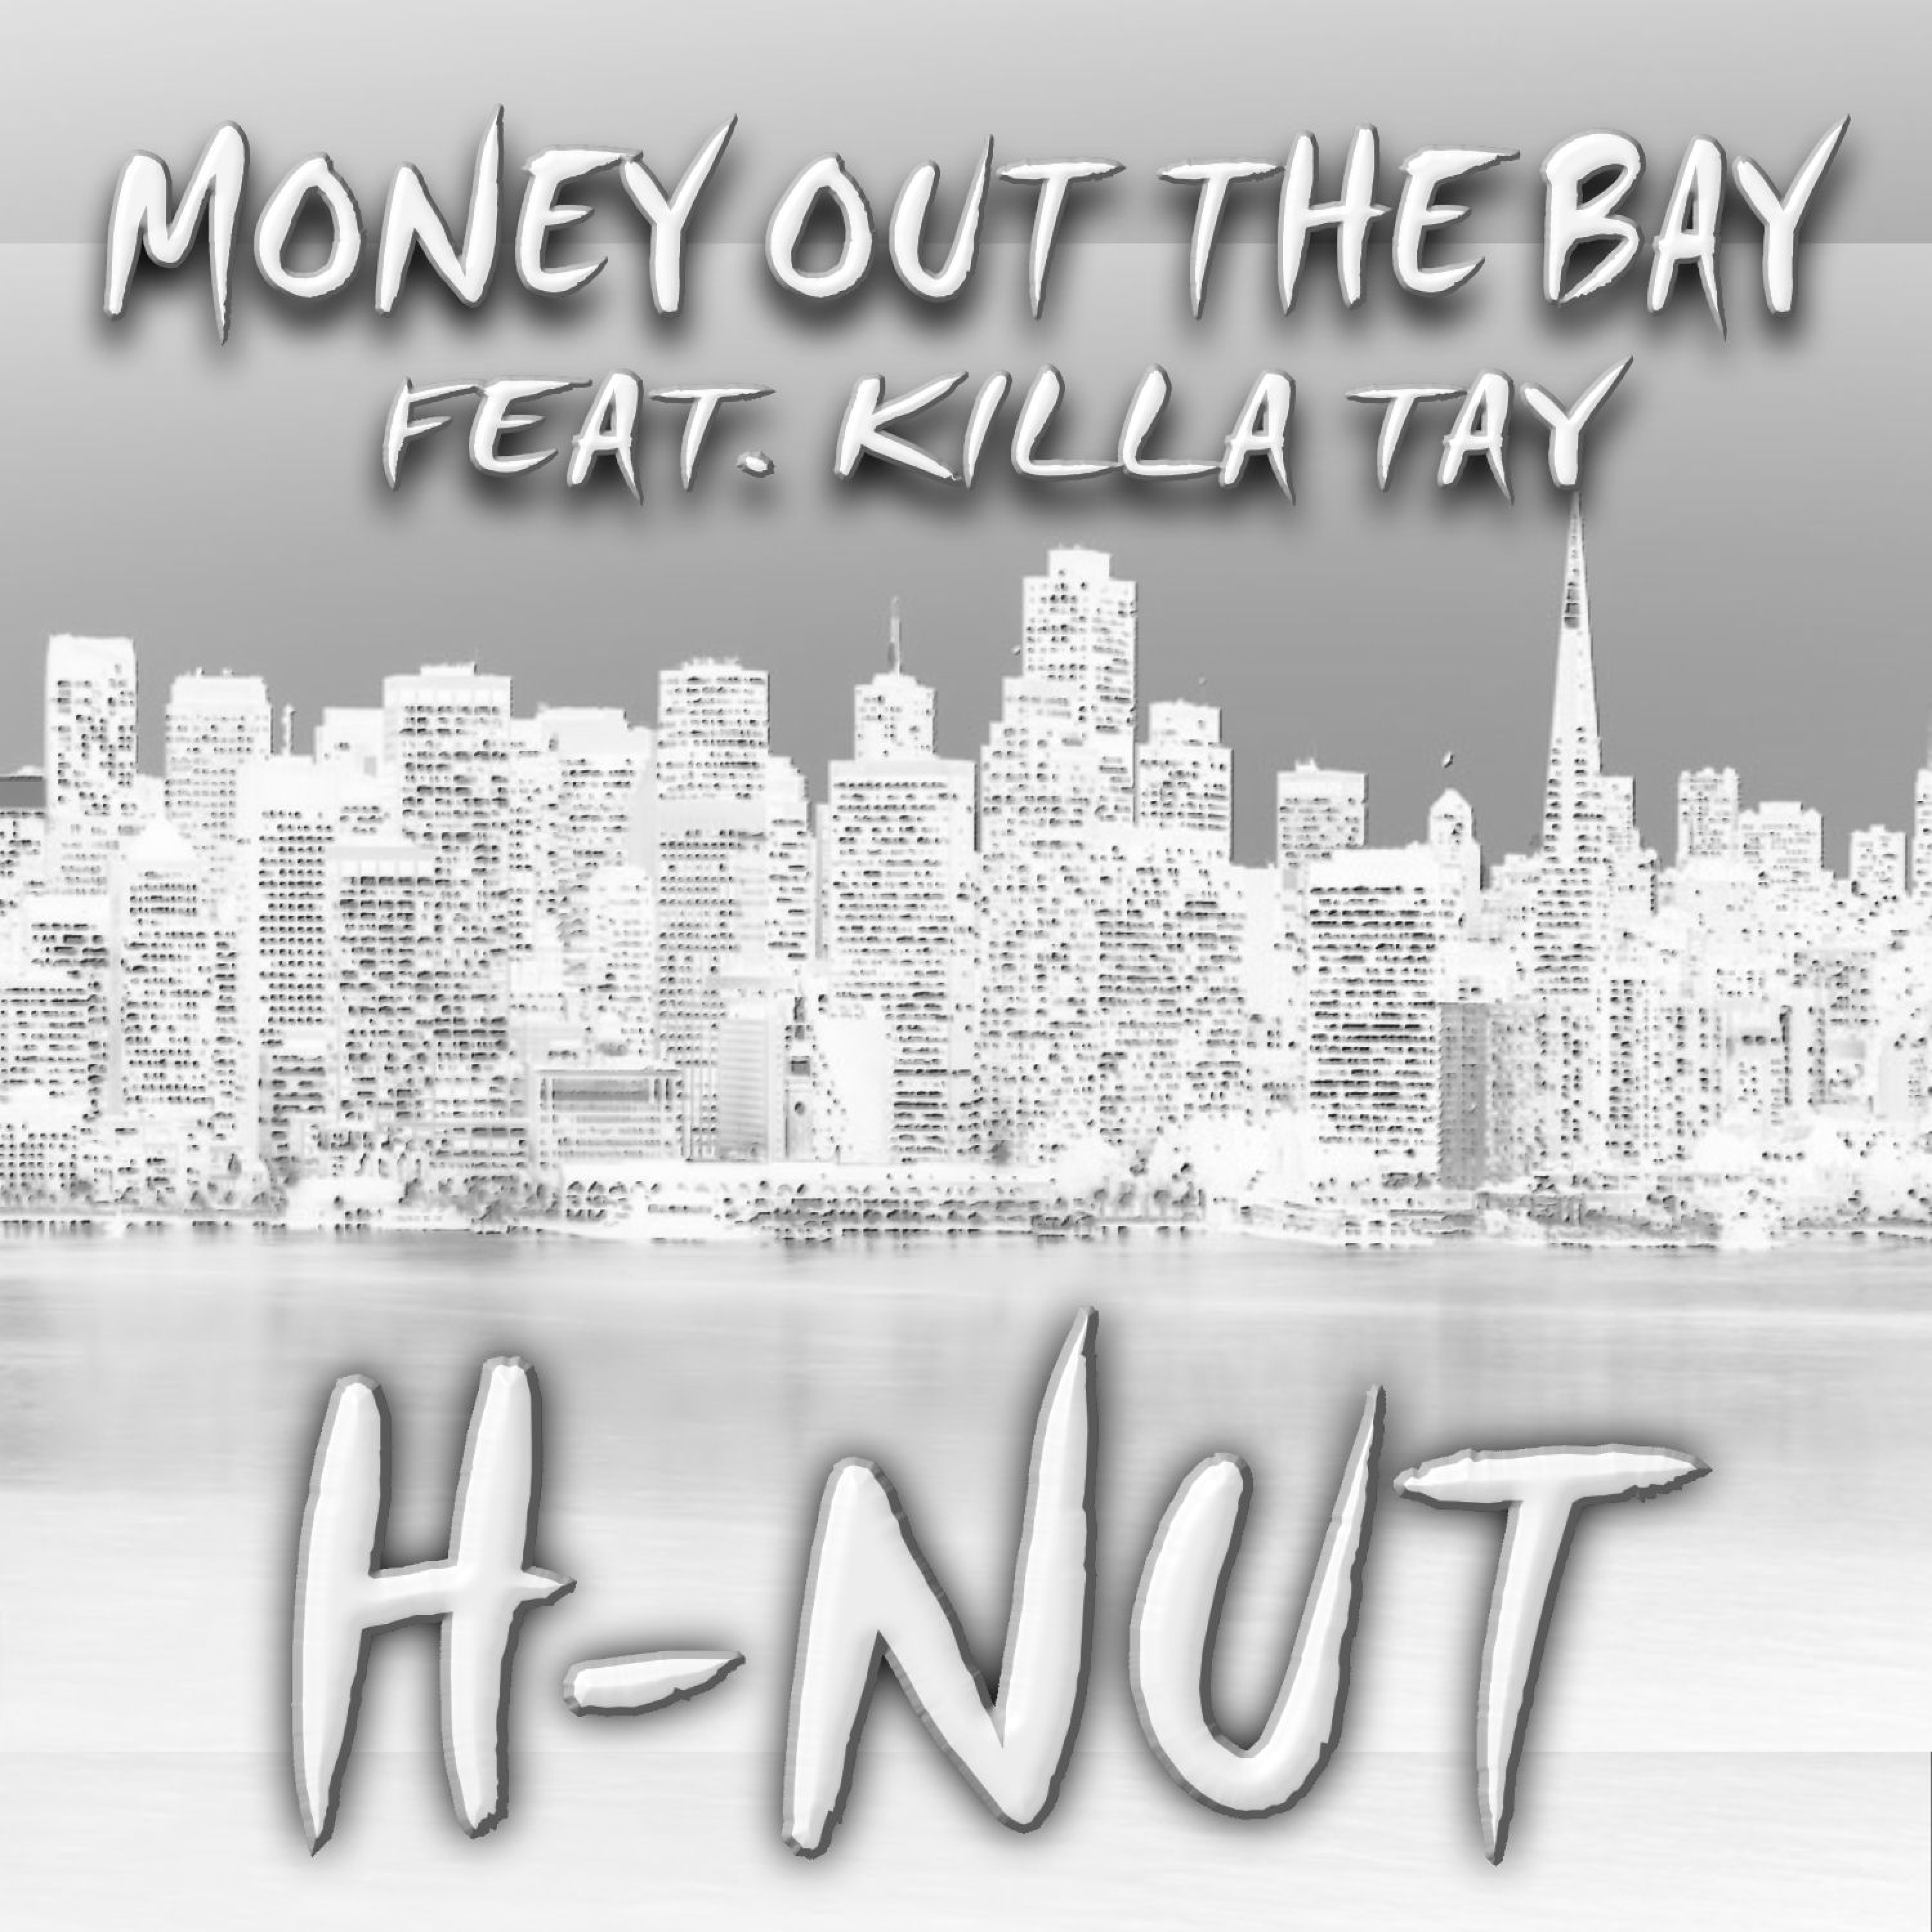 Money out the Bay (feat. Killa Tay)